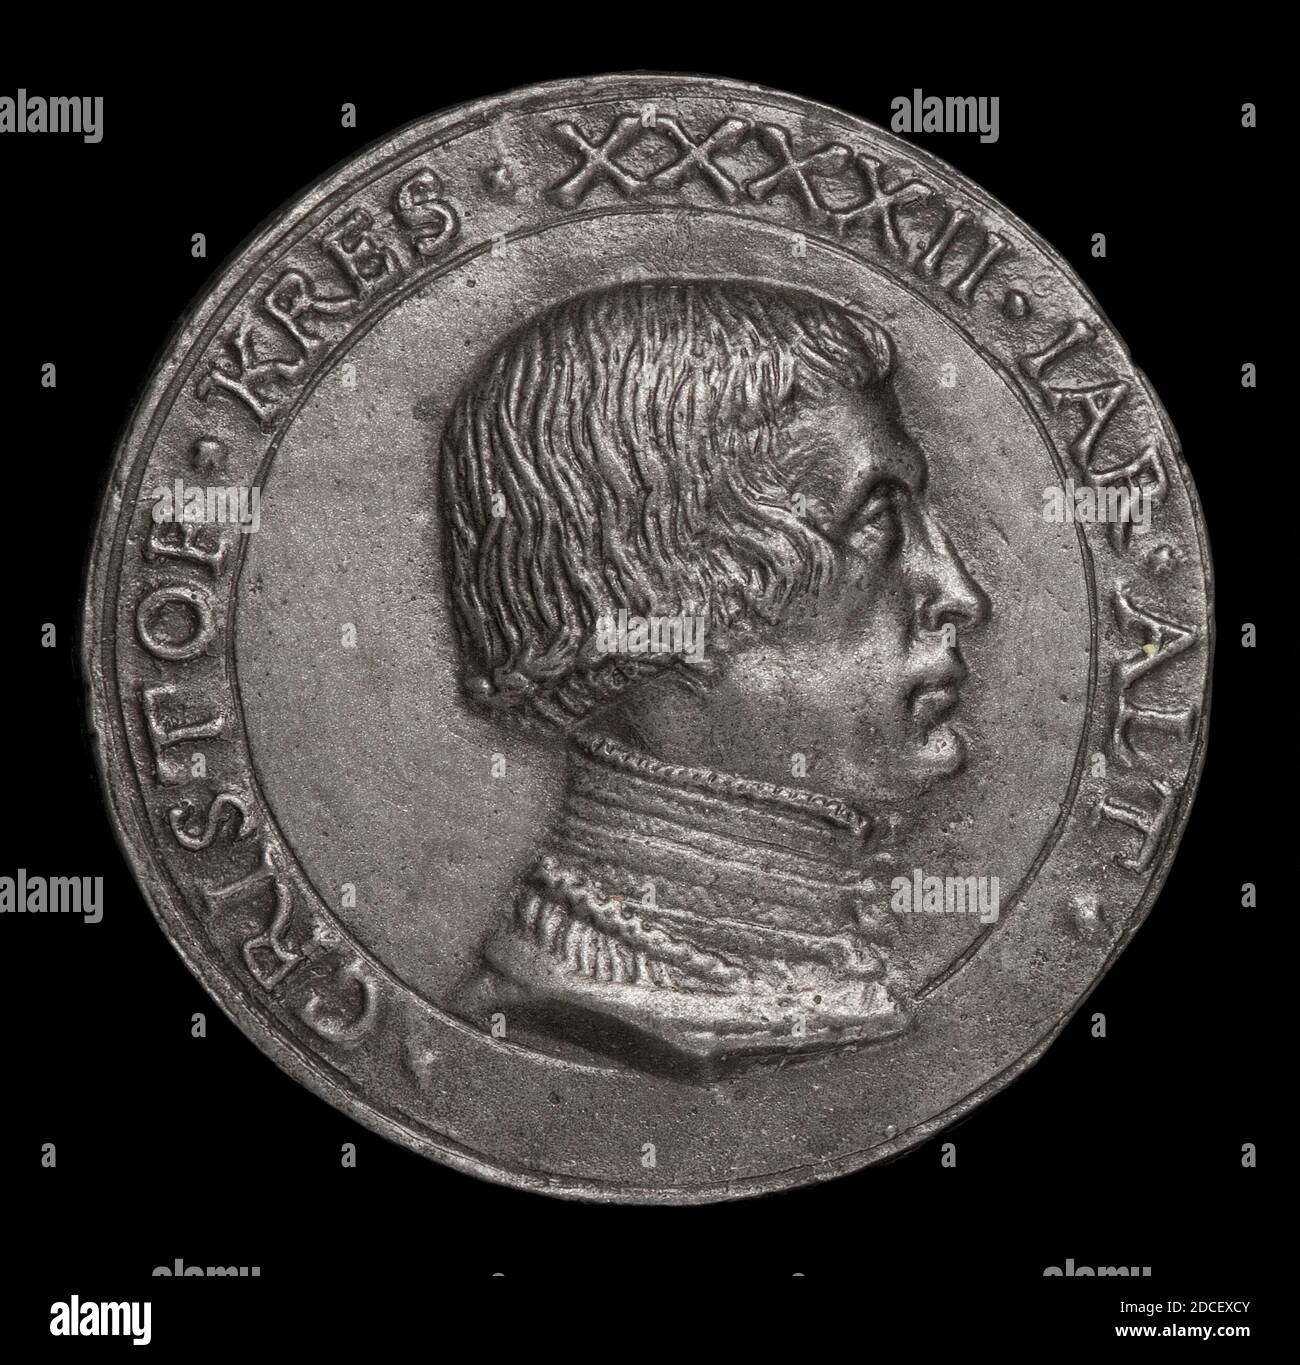 Matthes Gebel, (sculptor), German, c. 1500 - 1574, Christoph Kress von Kressenstein,1484-1535, Patrician and Diplomat, 1526, lead, overall (diameter): 3.92 cm (1 9/16 in.), gross weight: 23.89 gr (0.053 lb.), axis: 12:00 Stock Photo